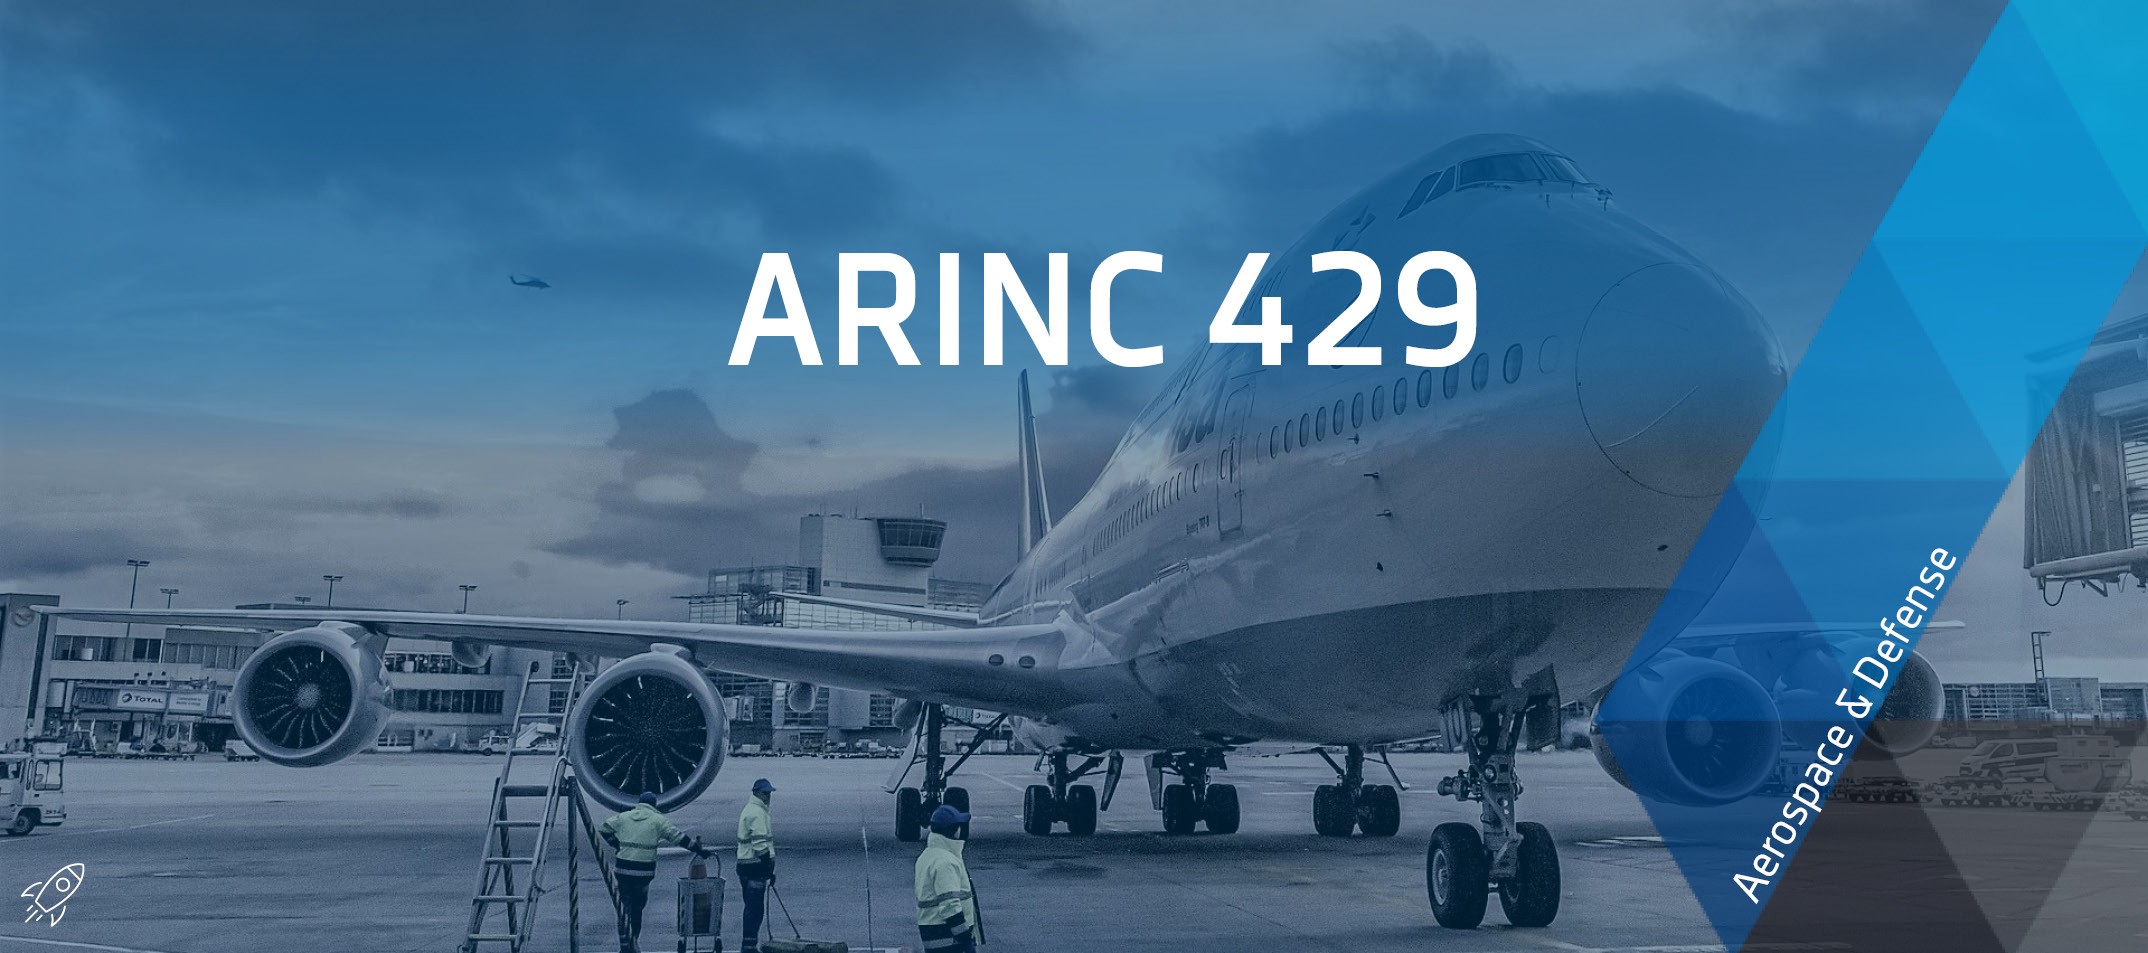 ARINC 429 Avionik Standard